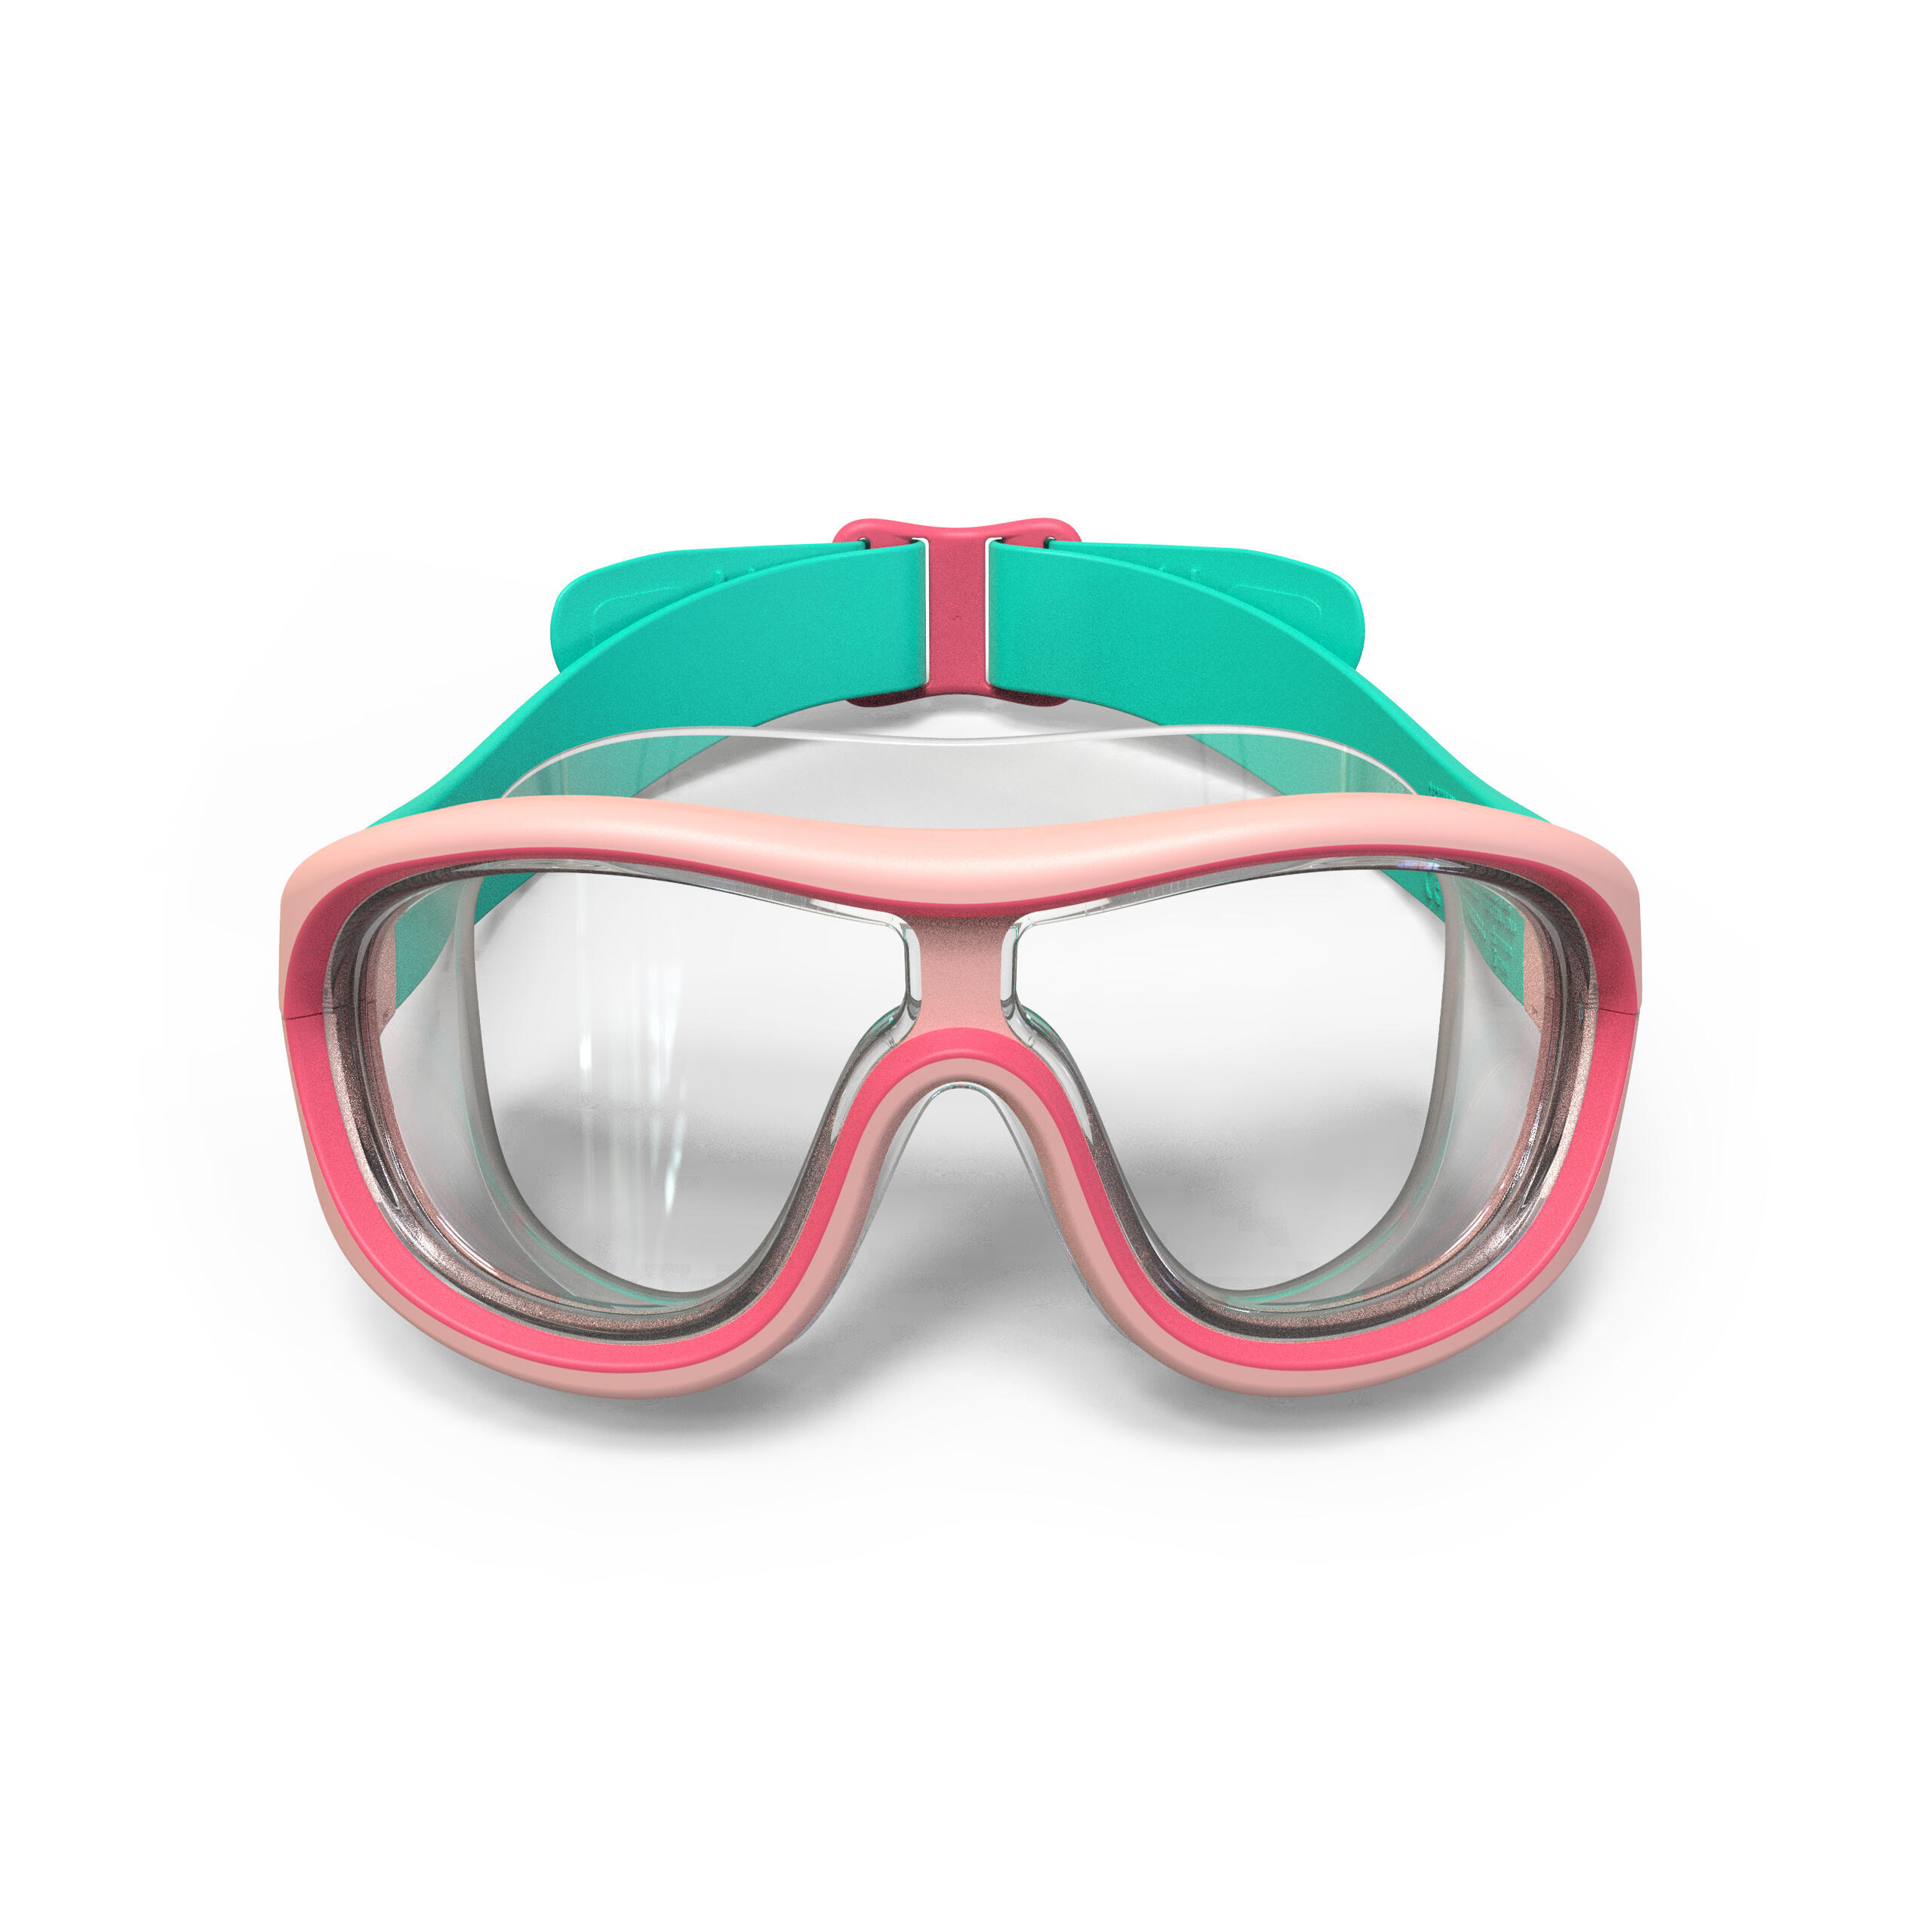 Pool mask SWIMDOW - Clear lens - Kids' size - Pink green 2/5